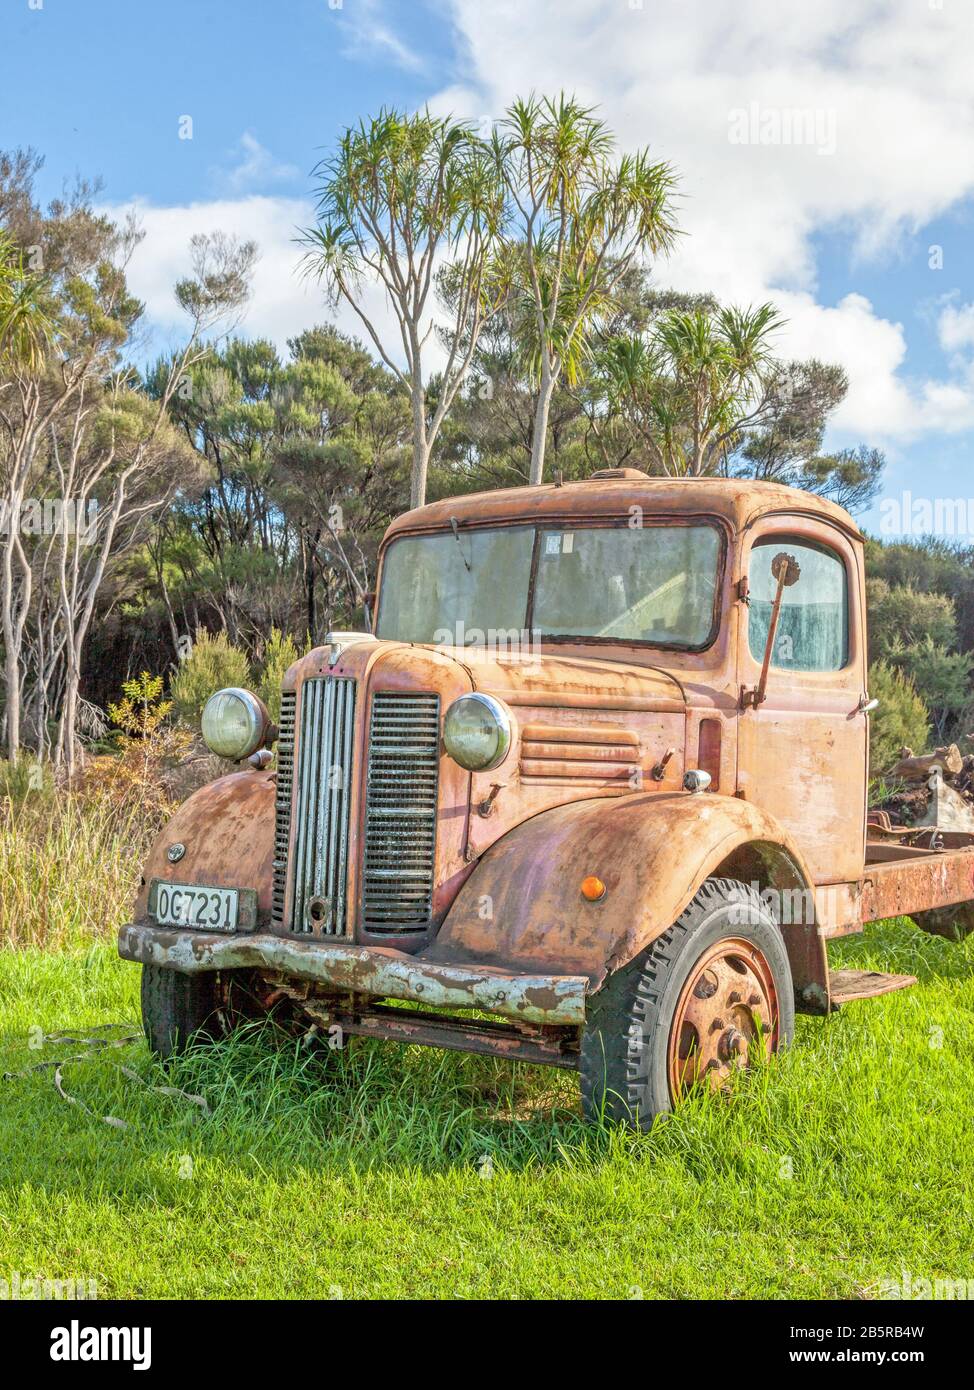 NORTH ISLAND, NEW ZEALAND - MAY 30, 2010: An abandoned, rusting truck on North Island, New Zealand. Stock Photo